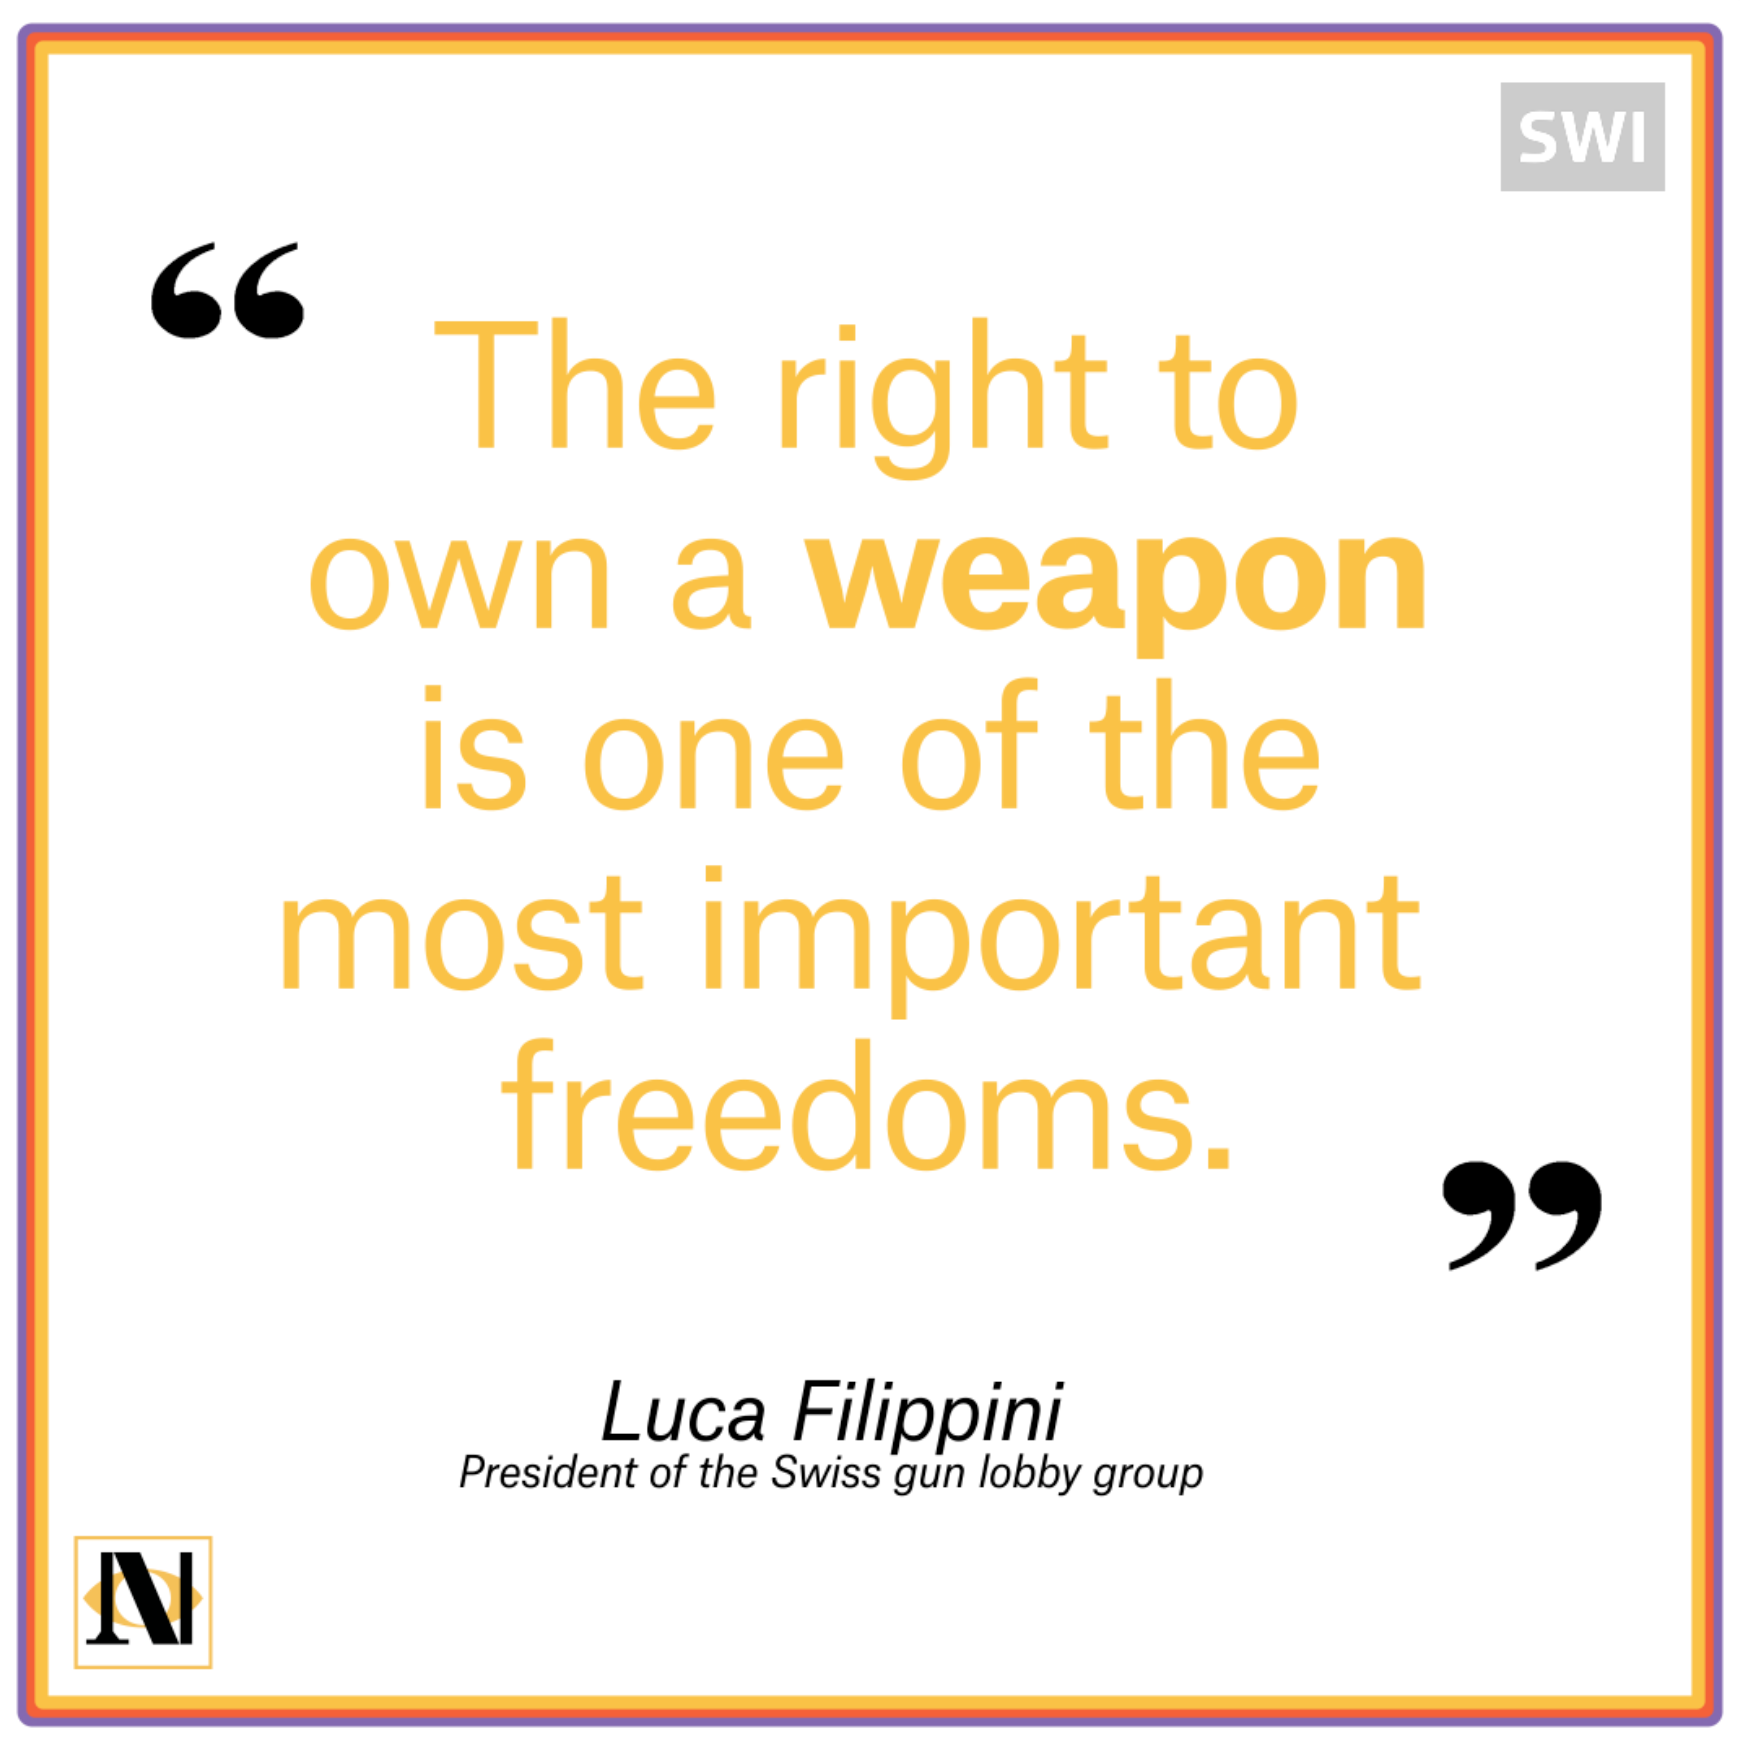 quote on gun freedom